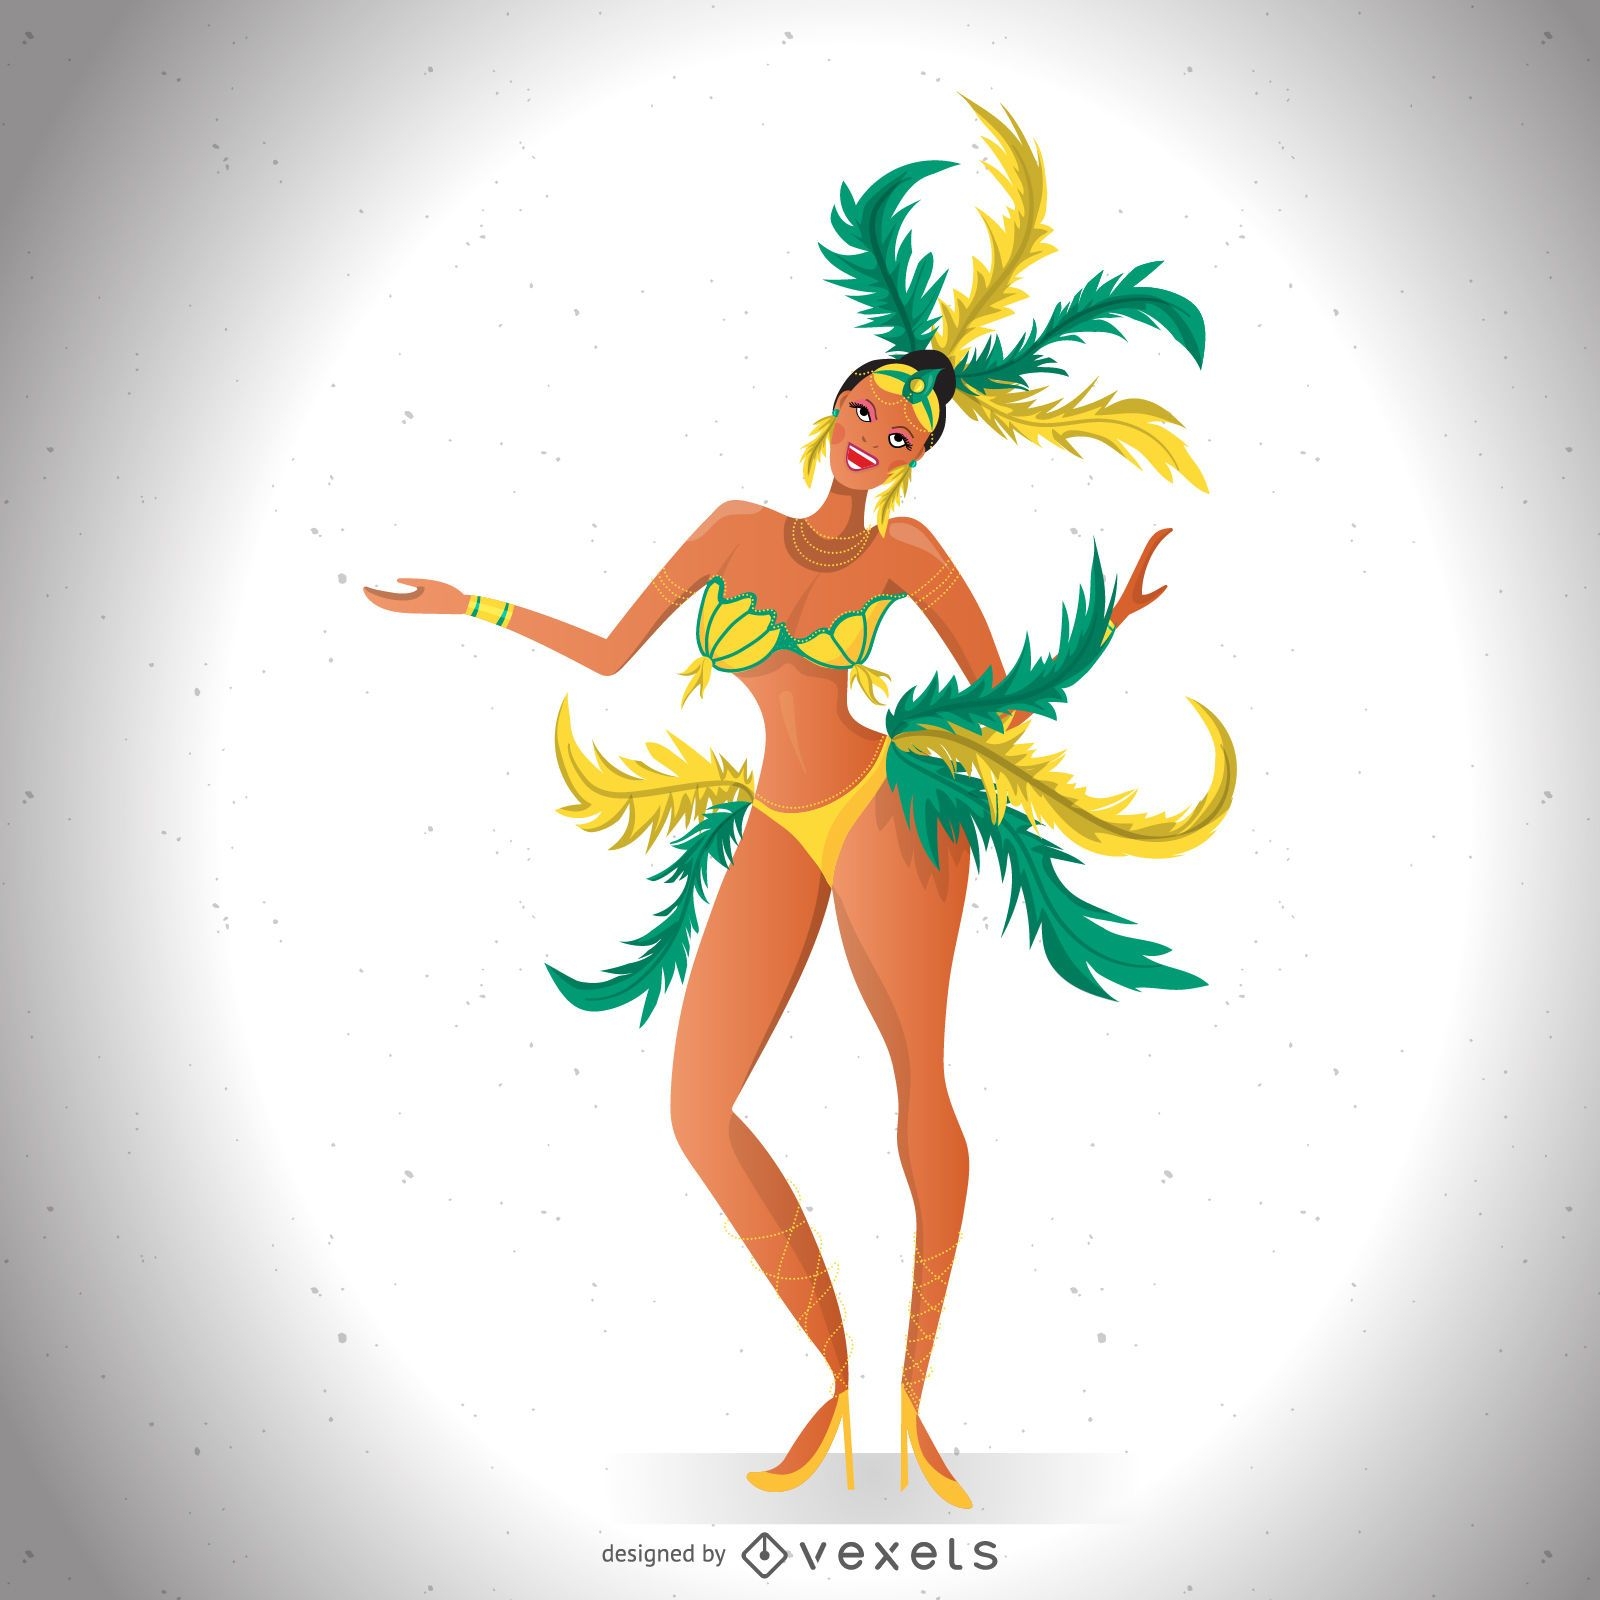 Ilustraci?n de bailarina de carnaval brasile?o